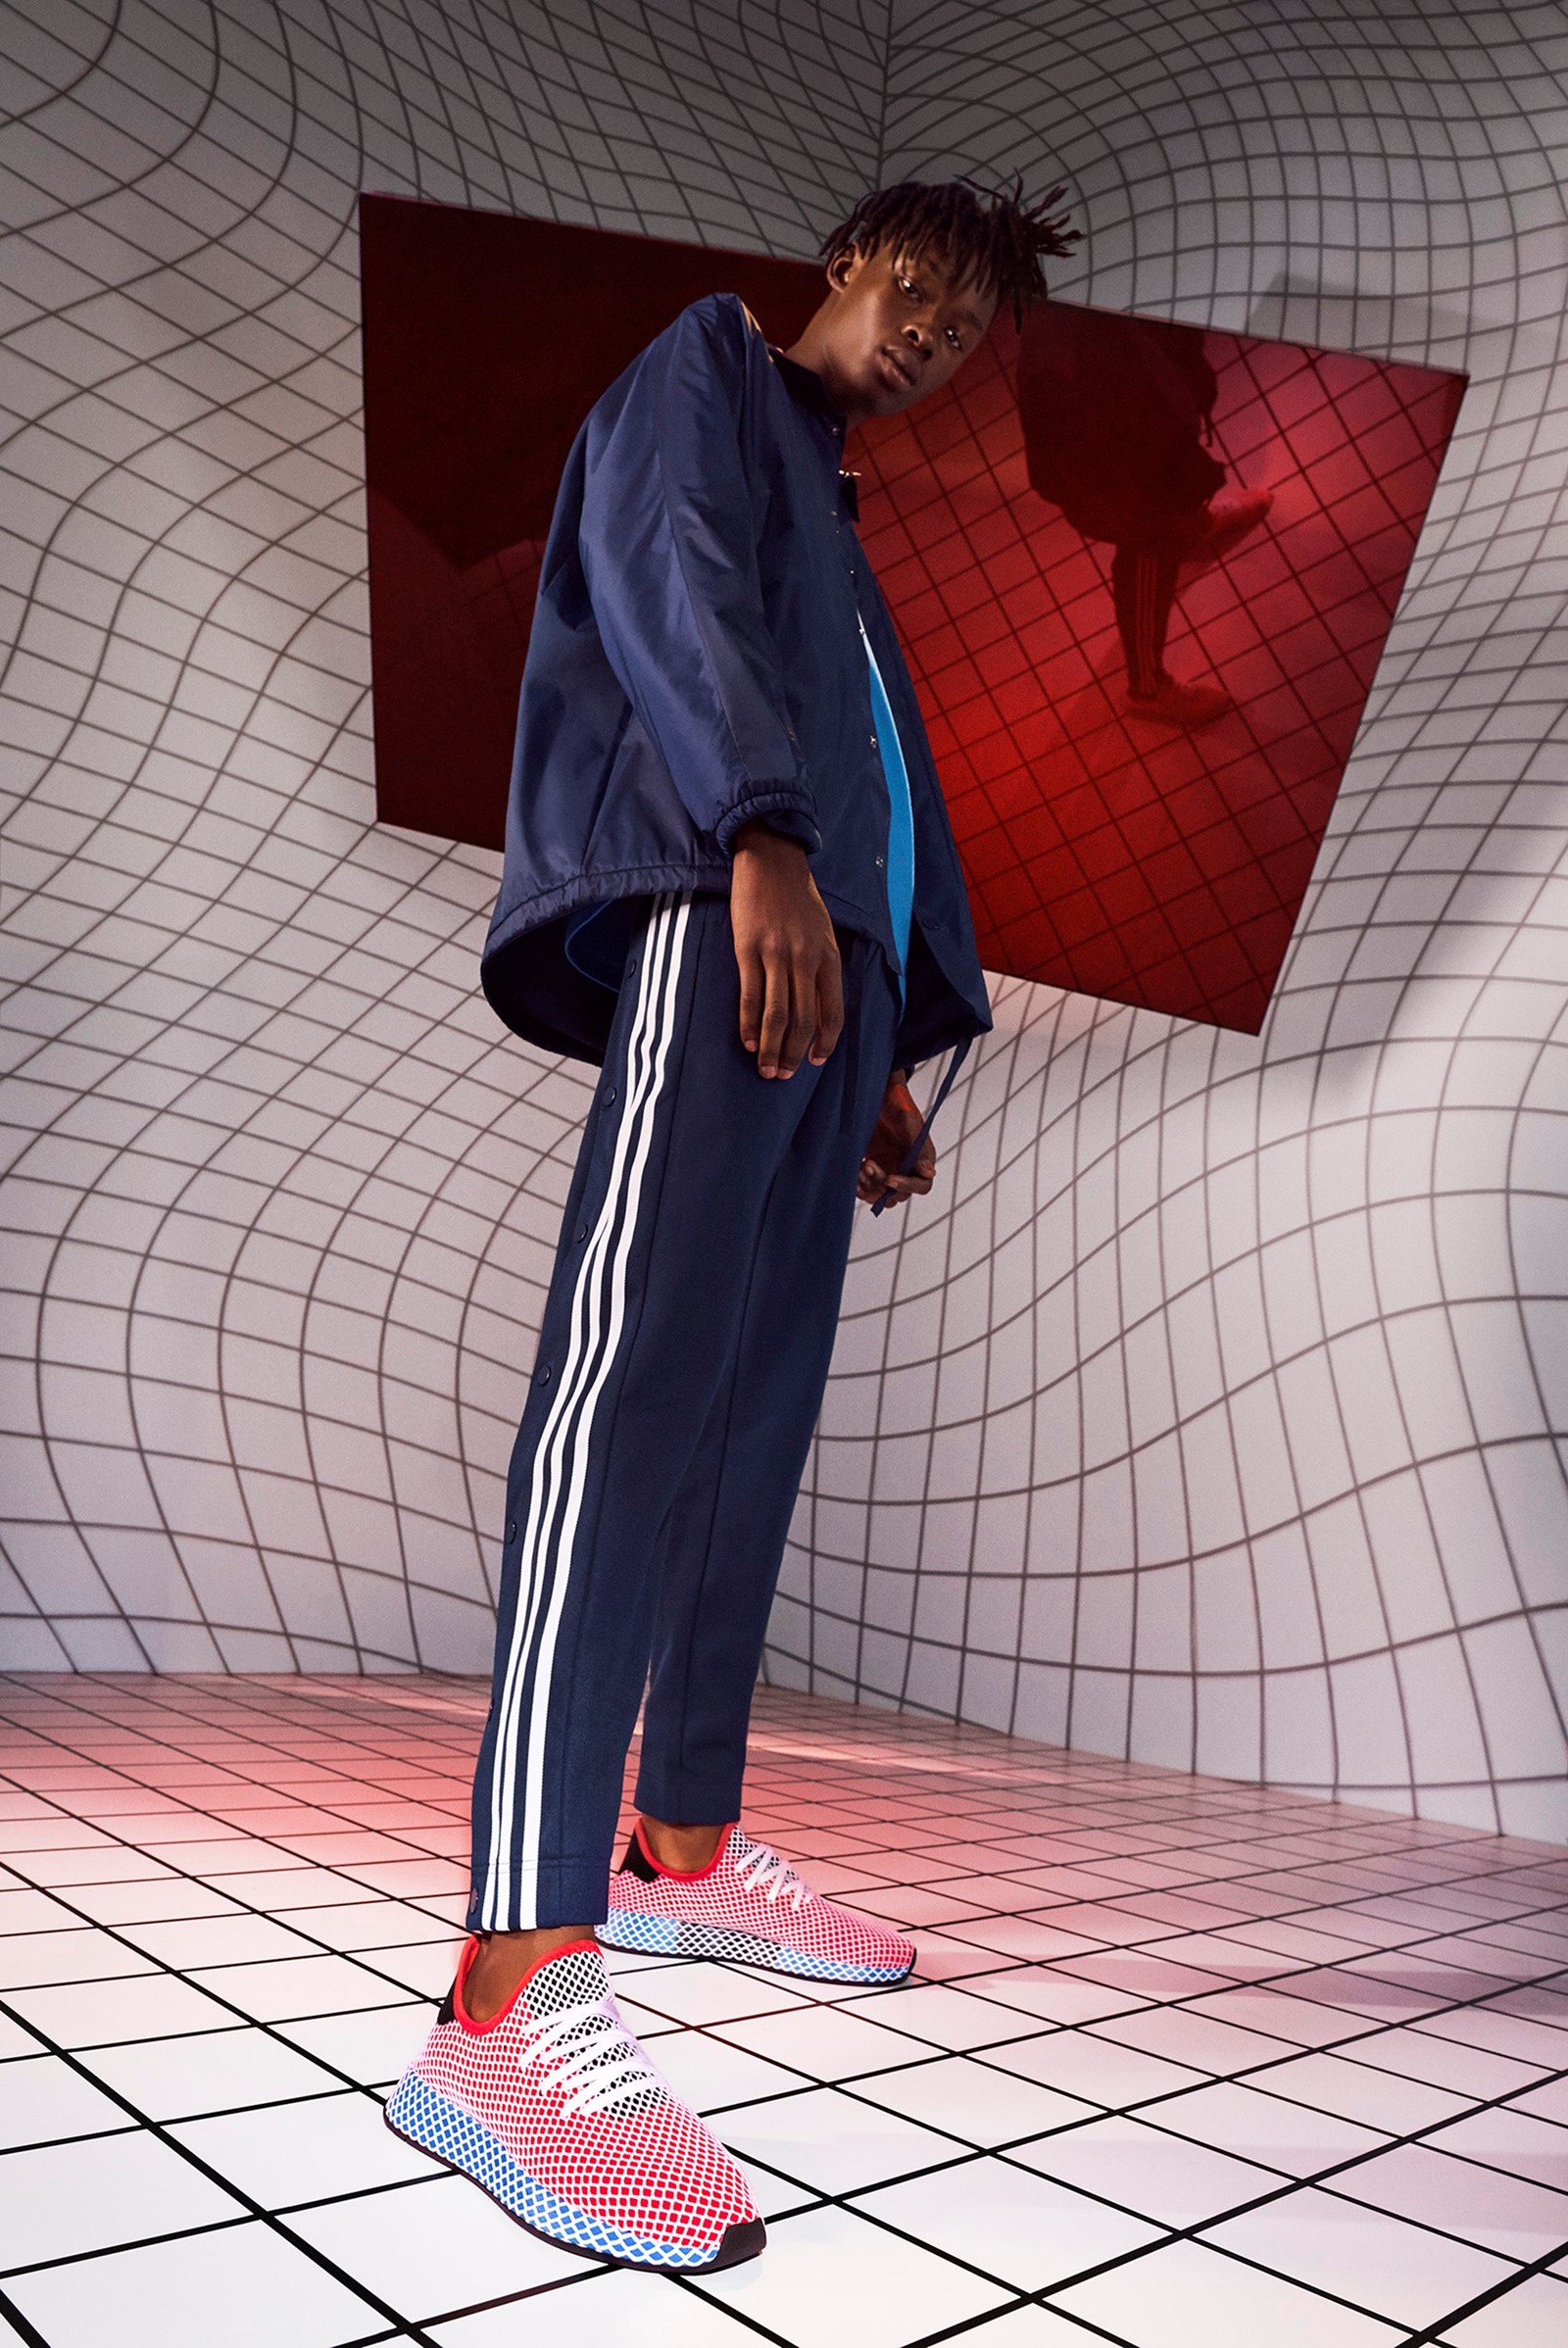 Giày thể thao Deerupt của thương hiệu Adidas Originals 1